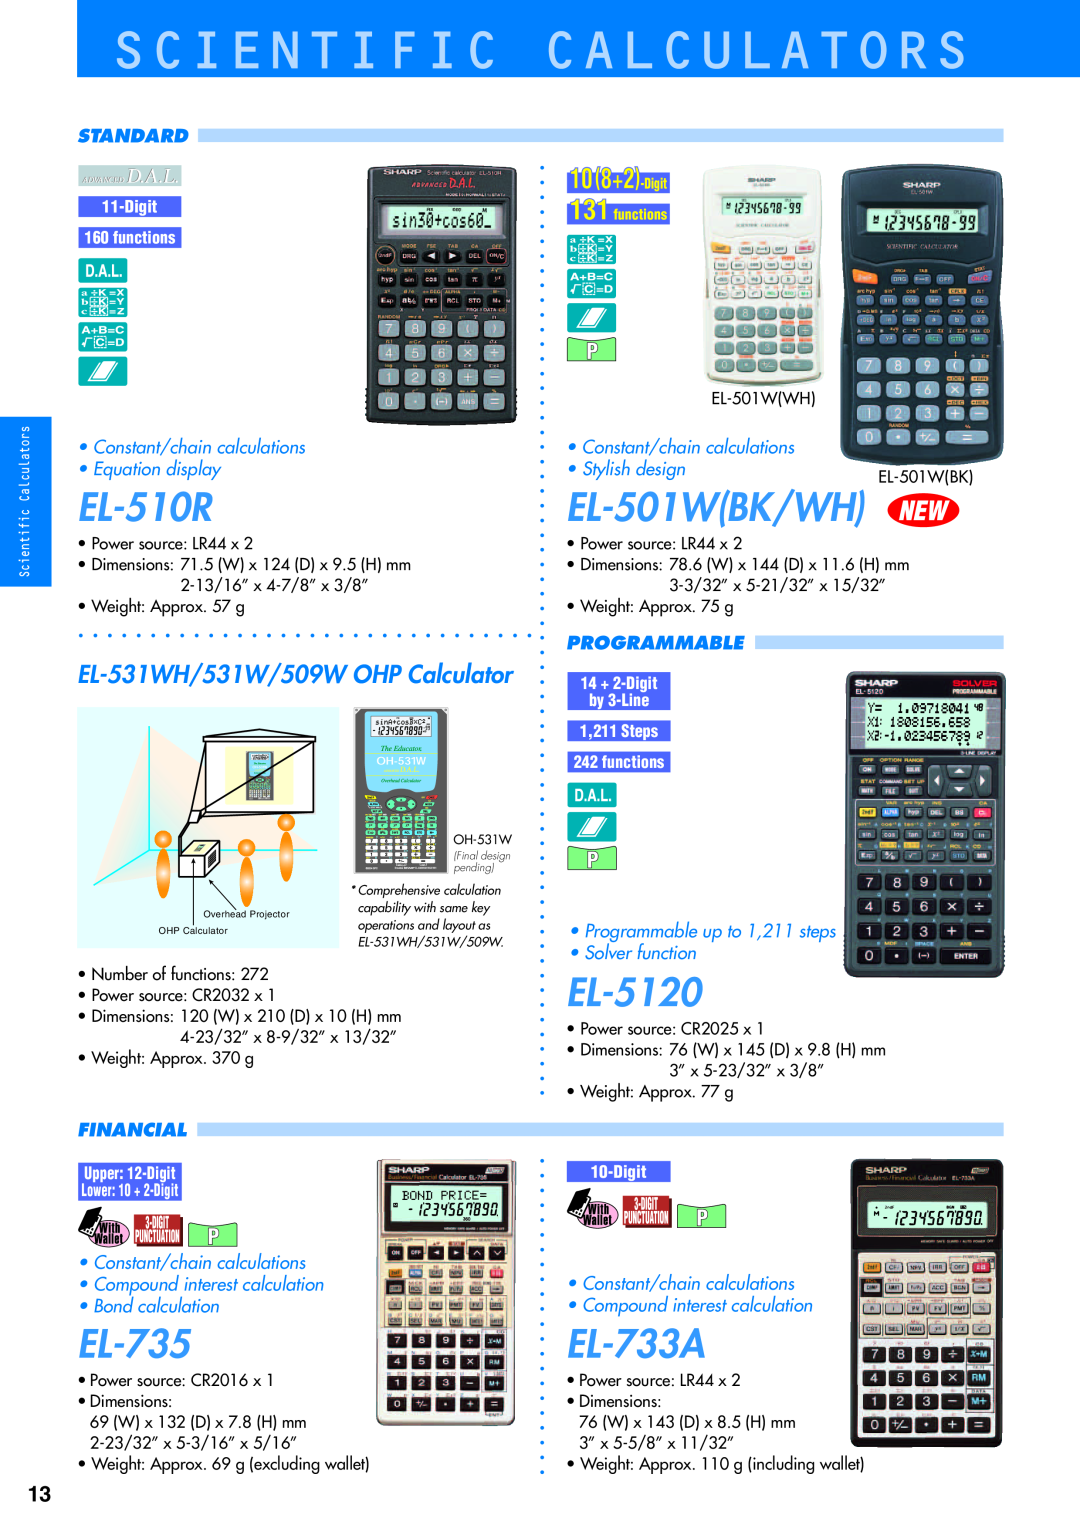 Sharp electronic calculator EL-510R, EL-501WBK/WH, EL-5120, EL-735, EL-733A, Scientific Calculators, Standard, Financial 